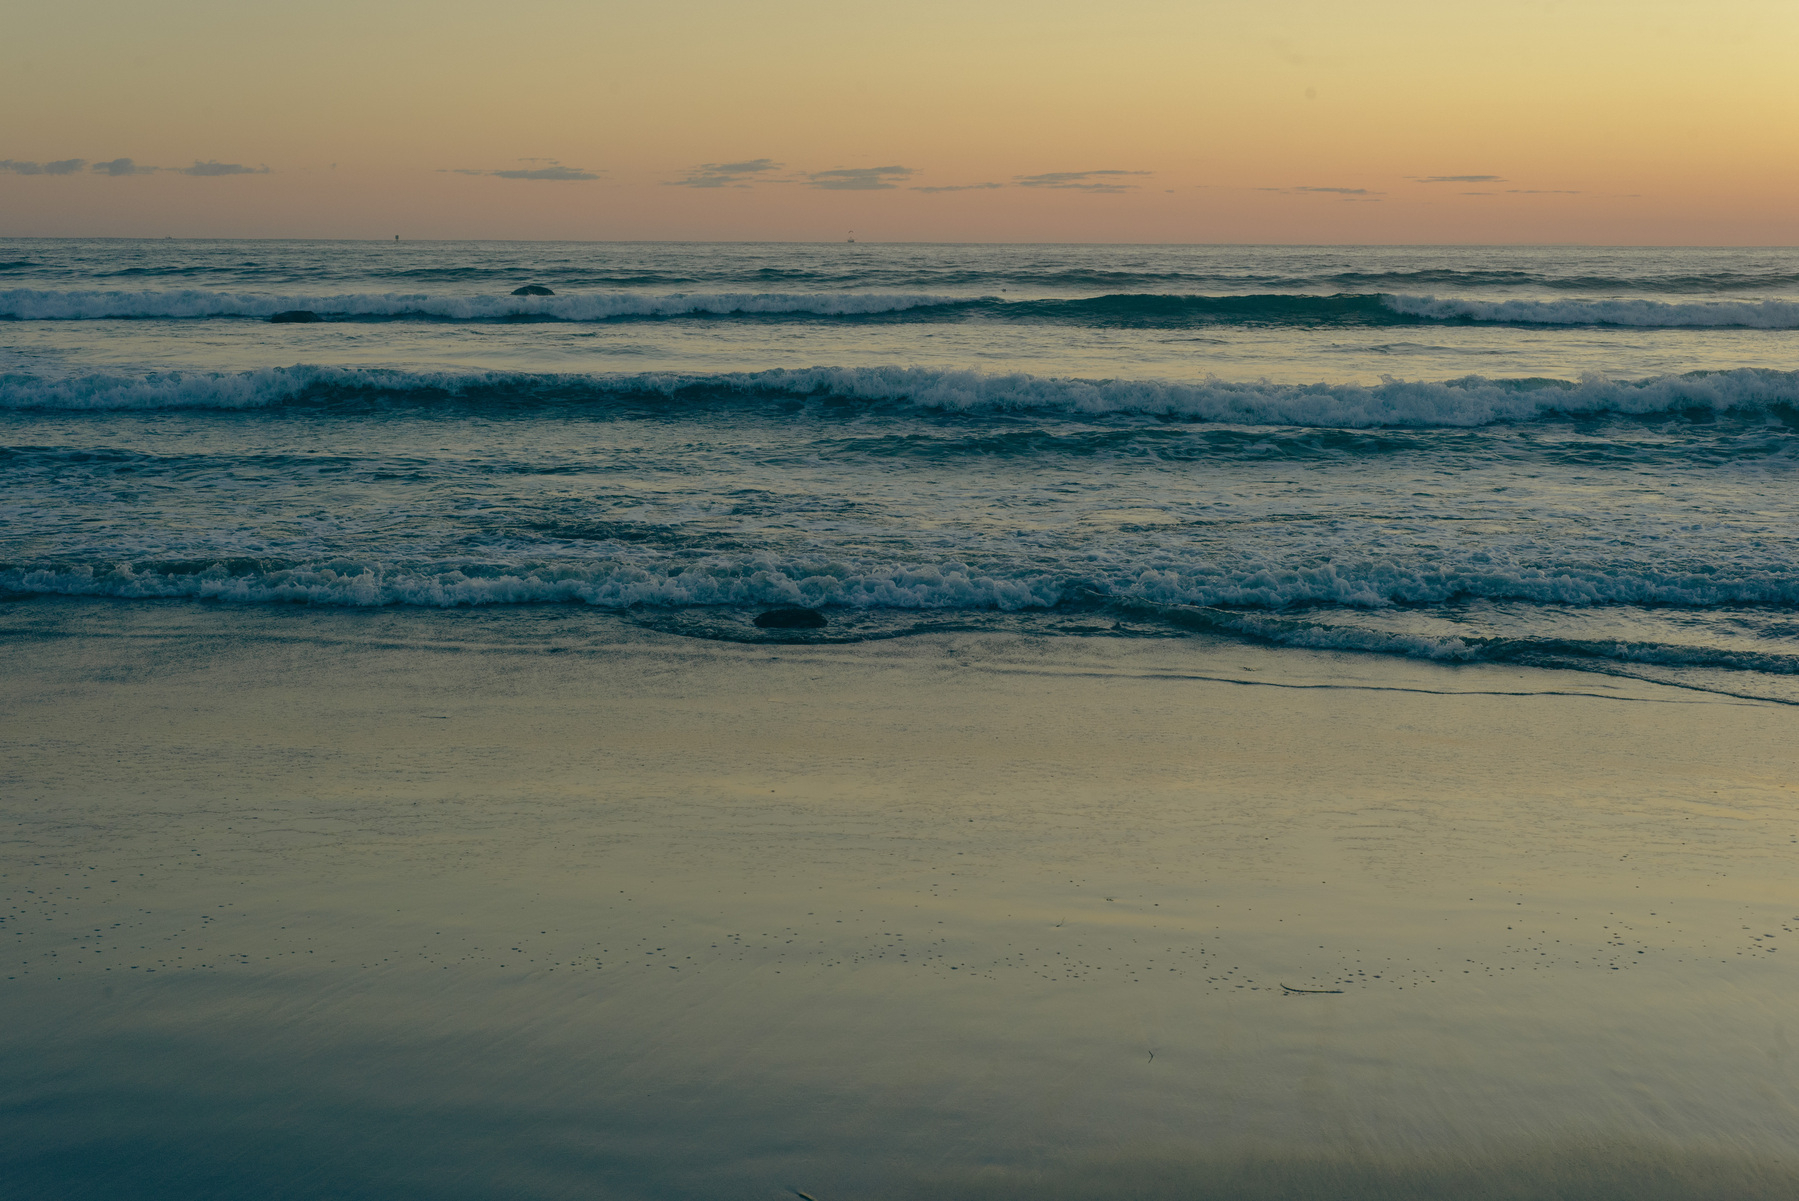 Beach/oceanscape just before sunrise.